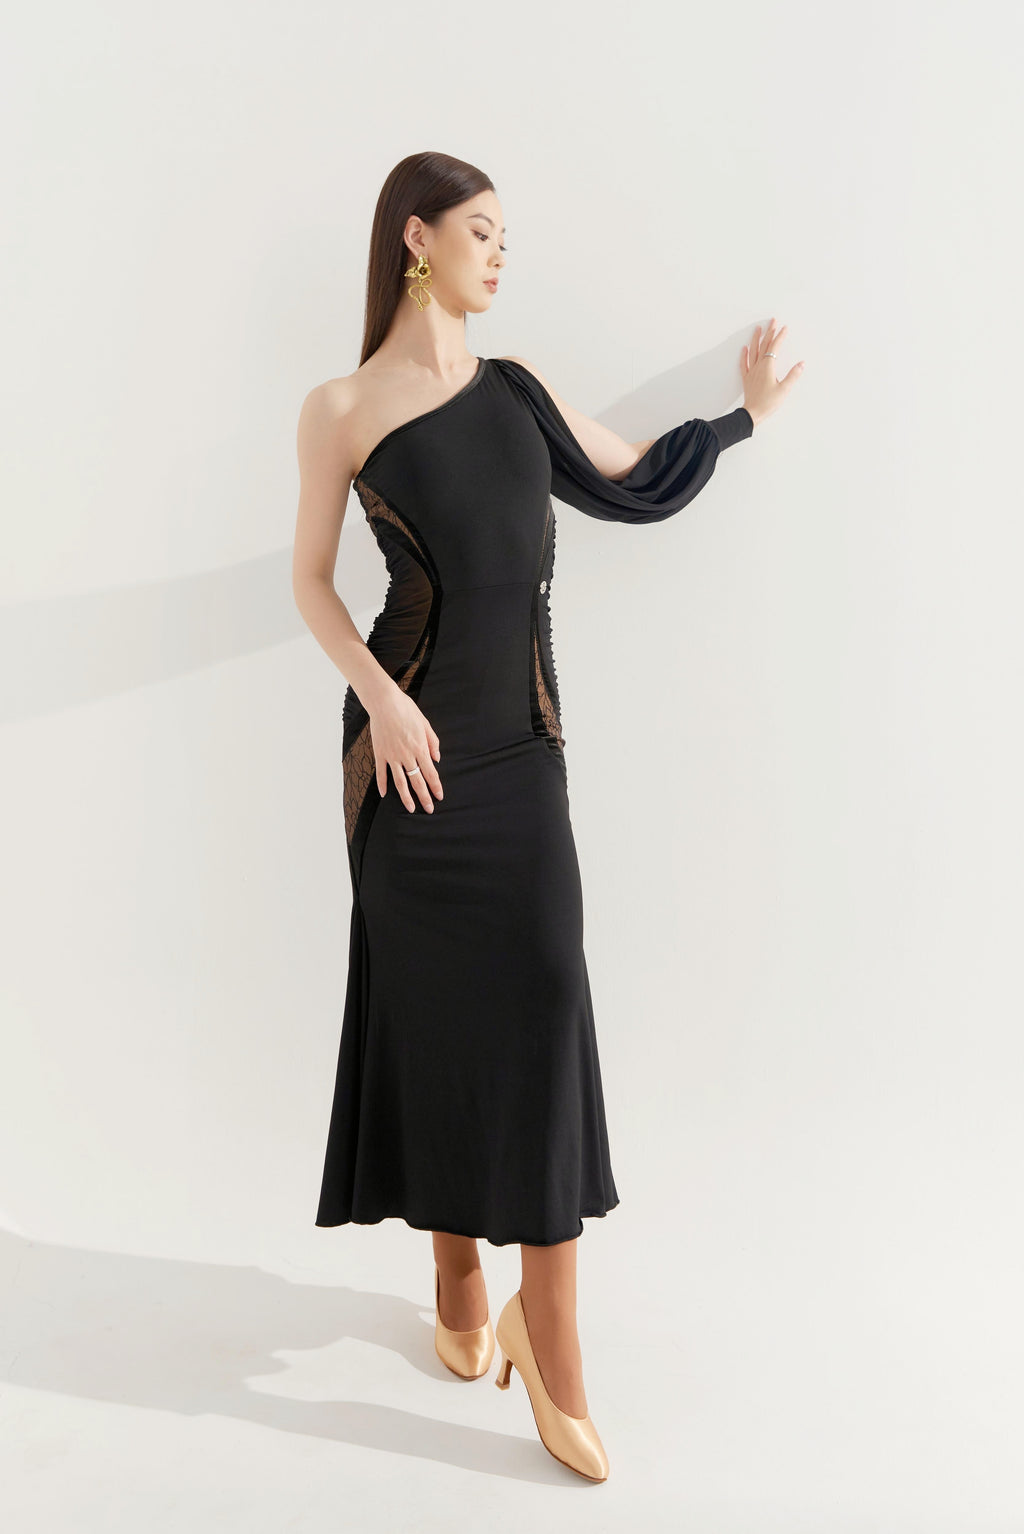 DQ-554 Tailor-Made Asymmetrical Open Sleeve Mermaid Dress